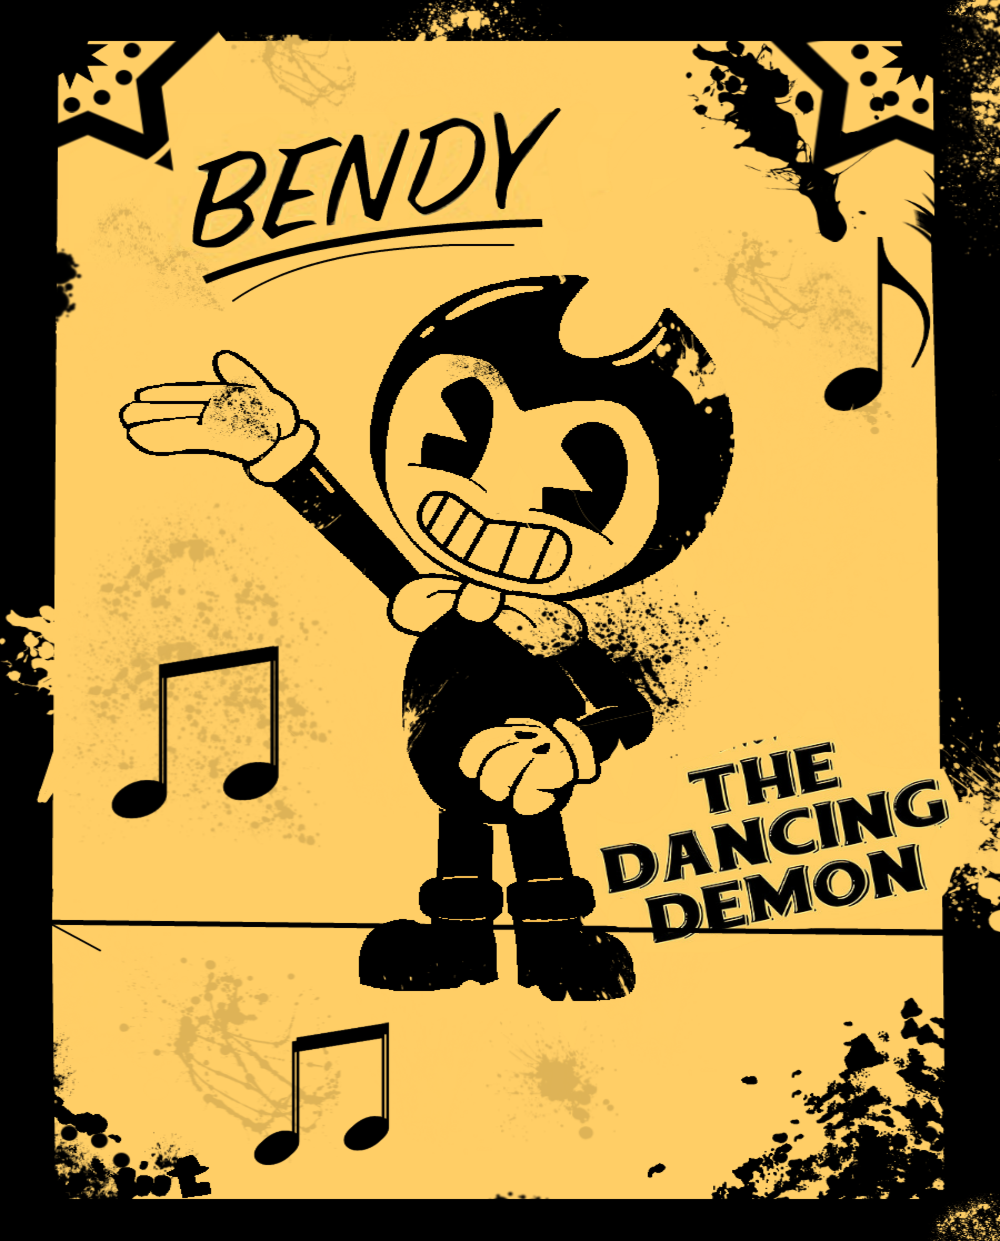 Bendy the dancing demon ~ poster by Laukku2000 on DeviantArt